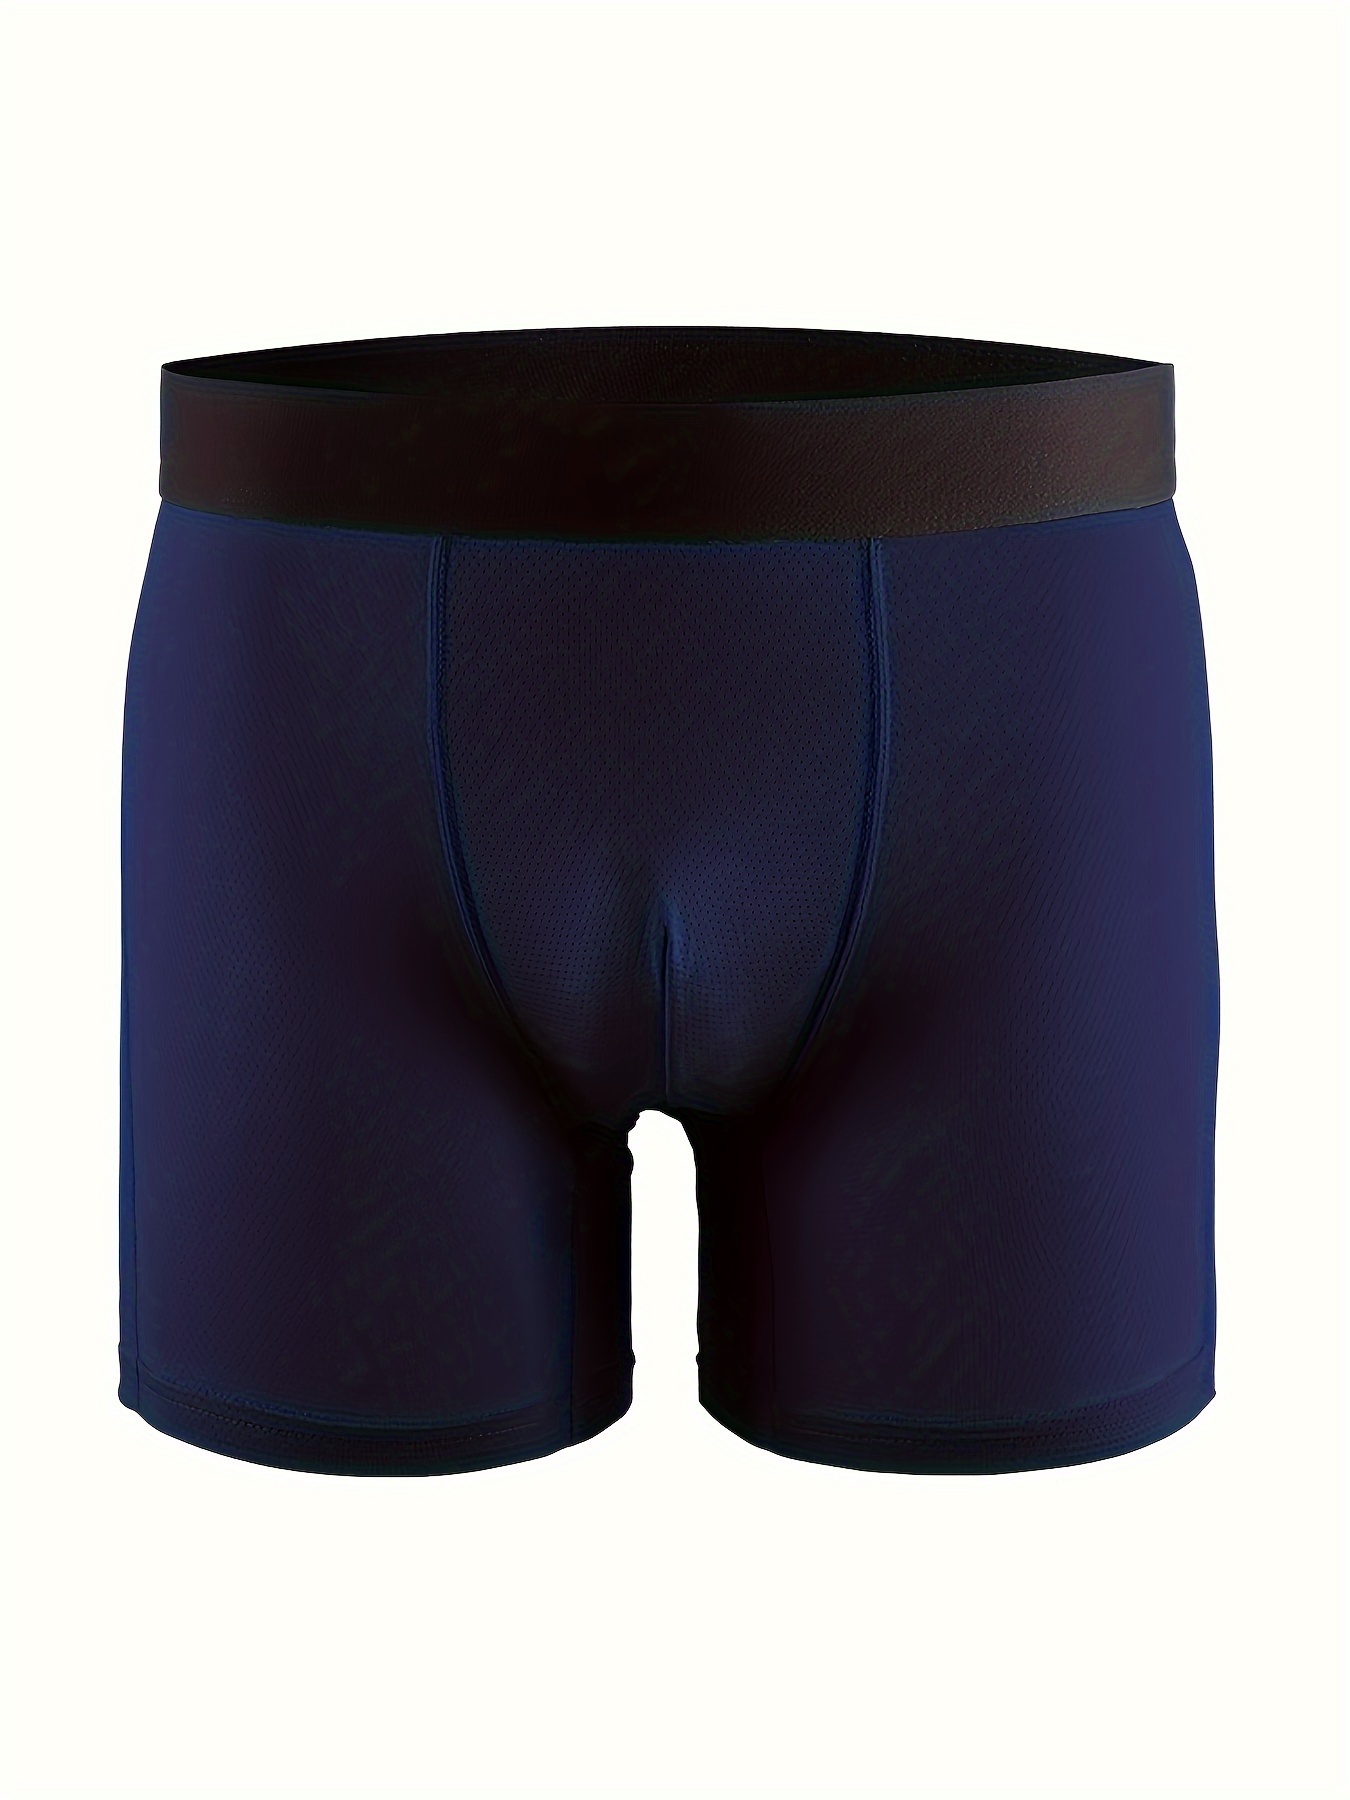 1pc Men's Long Leg Anti-Chafing Underwear, Mid-Waist Breathable